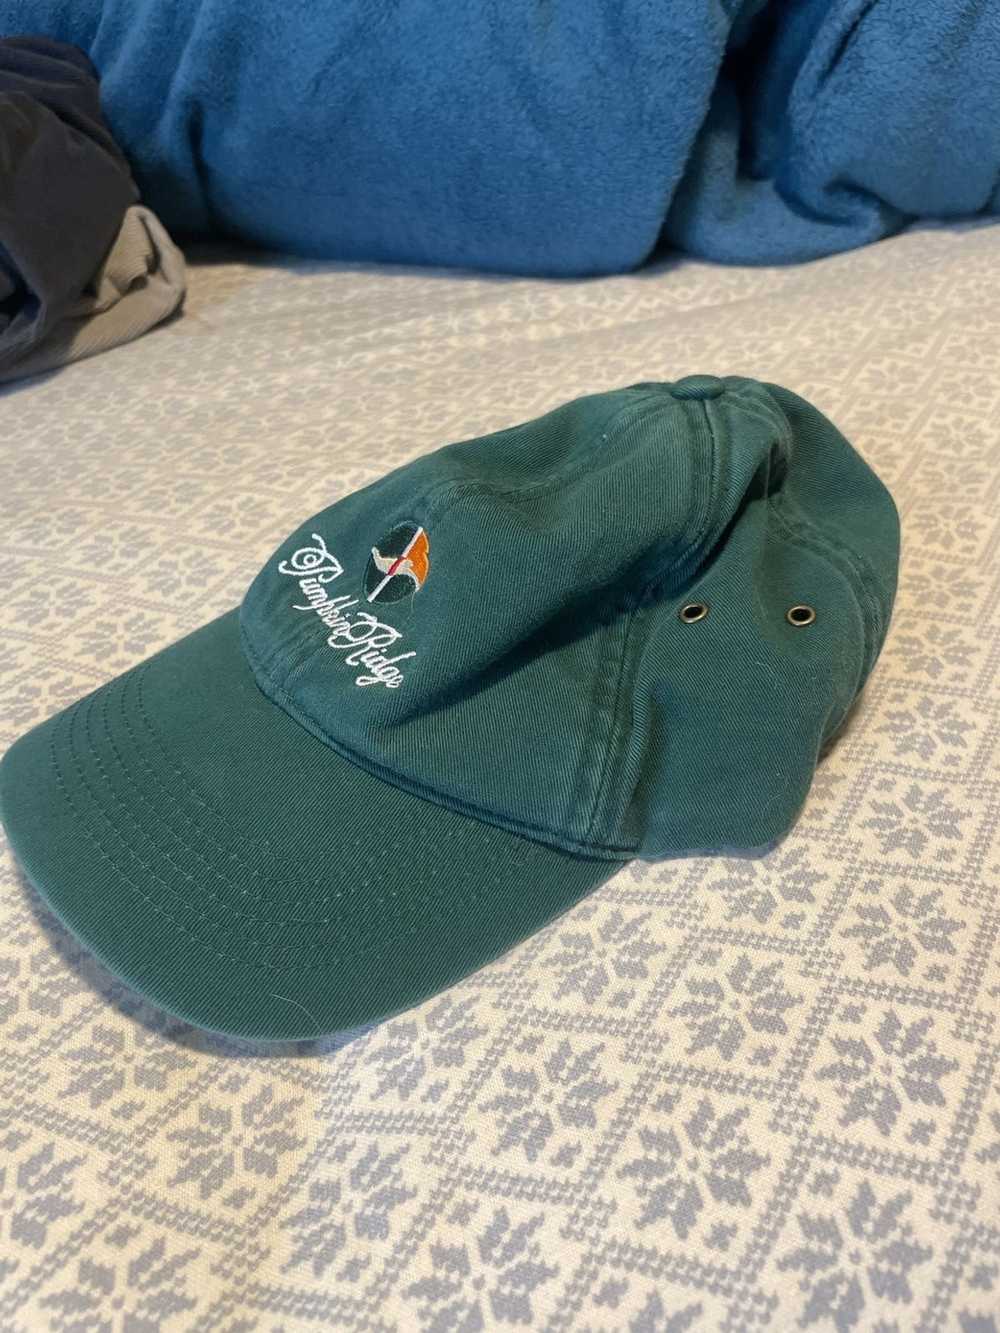 Vintage Pumpkin Ridge golf hat - image 1